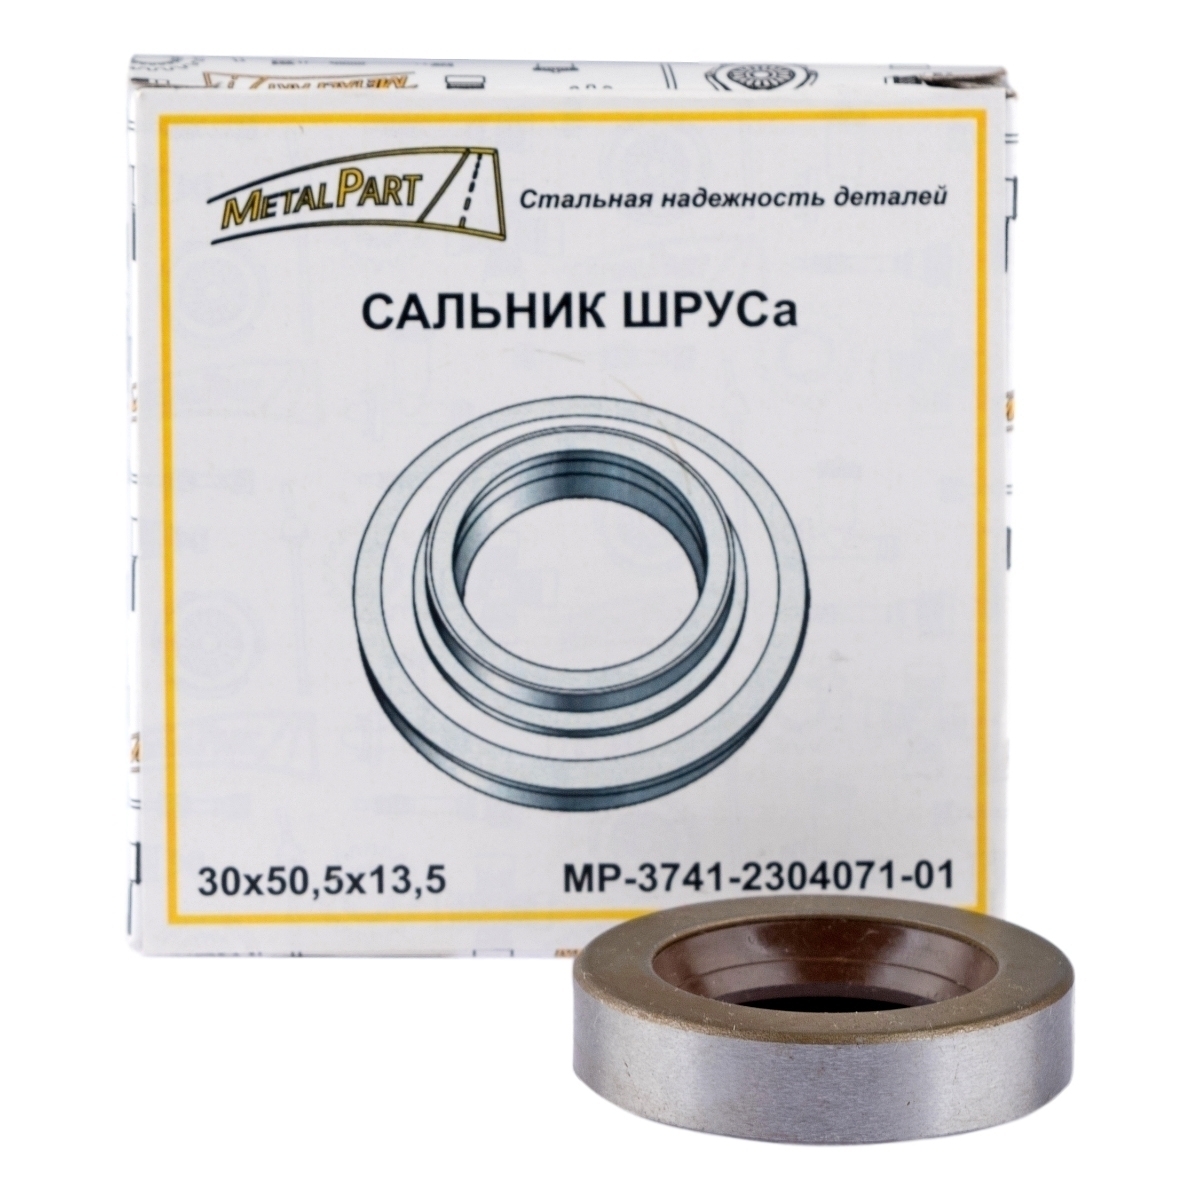 Сальник ШРУСа MetalPart для автомобилей УАЗ  30х50,5х13,5 Материал FPM (Viton)